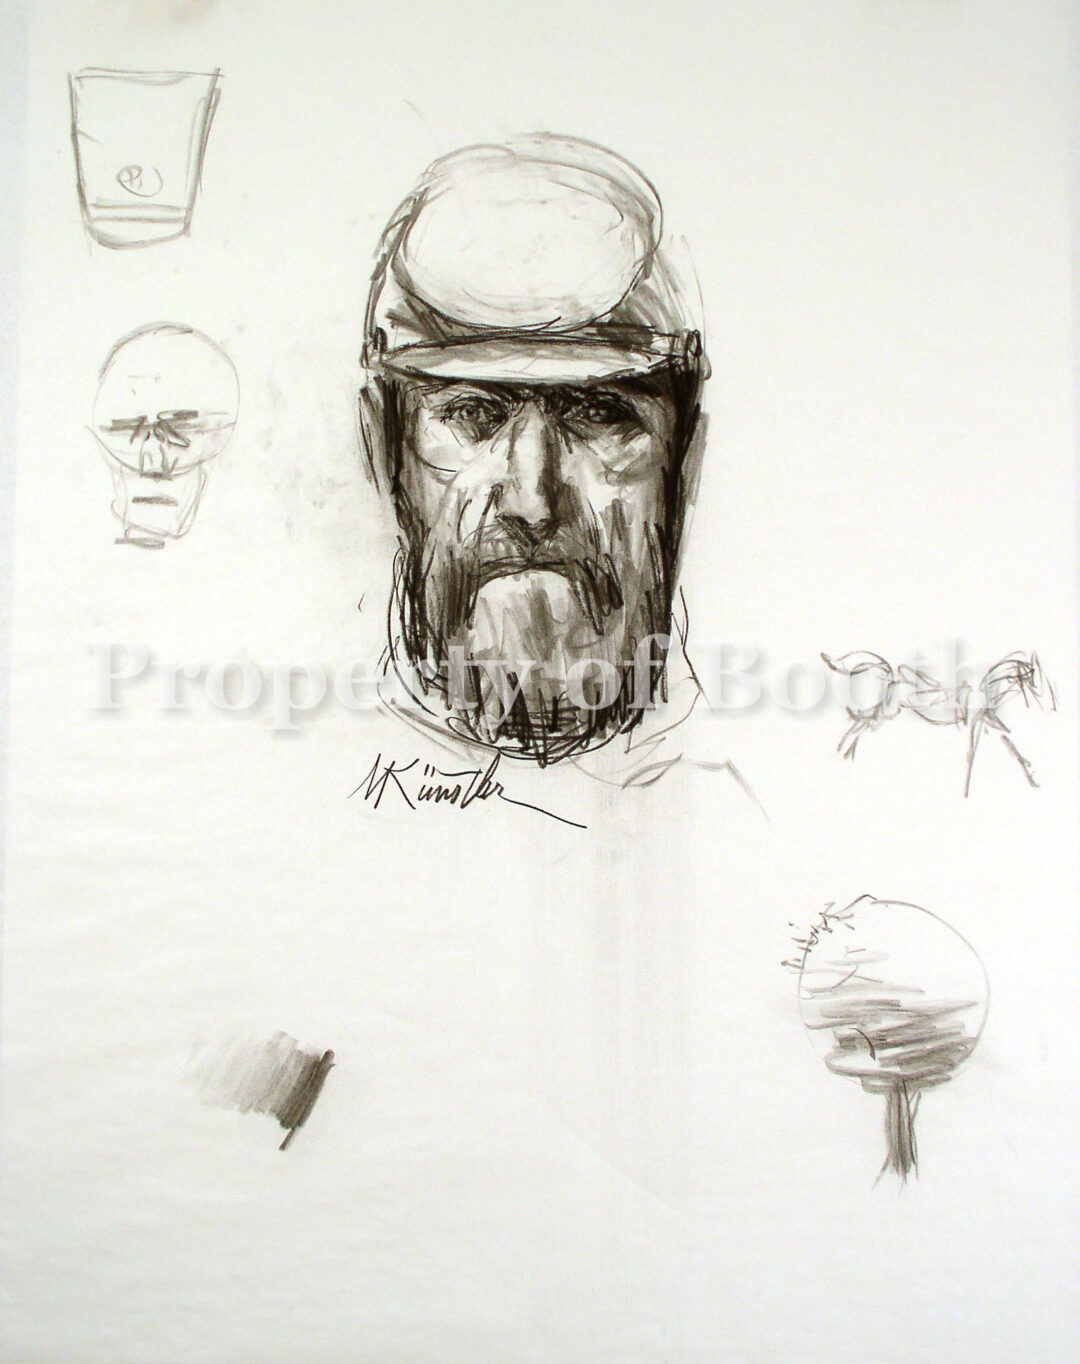 © Morton Künstler, Sketch, 2003, pencil on paper, 32.5" x 26.75" x 0"